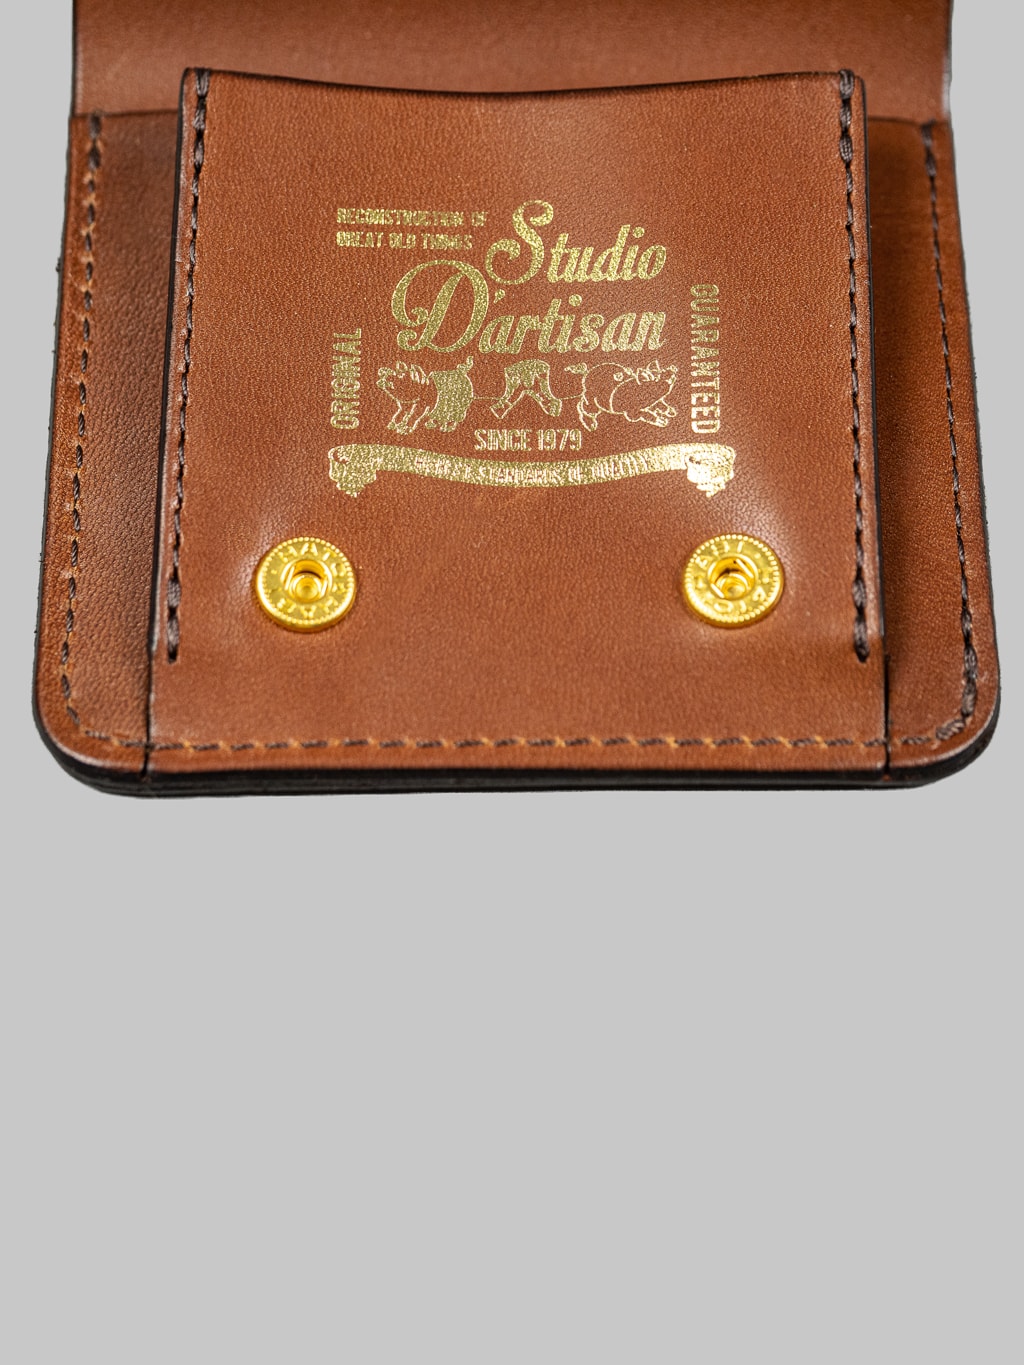 Studio Dartisan brown leather mini wallet hand stamped logo